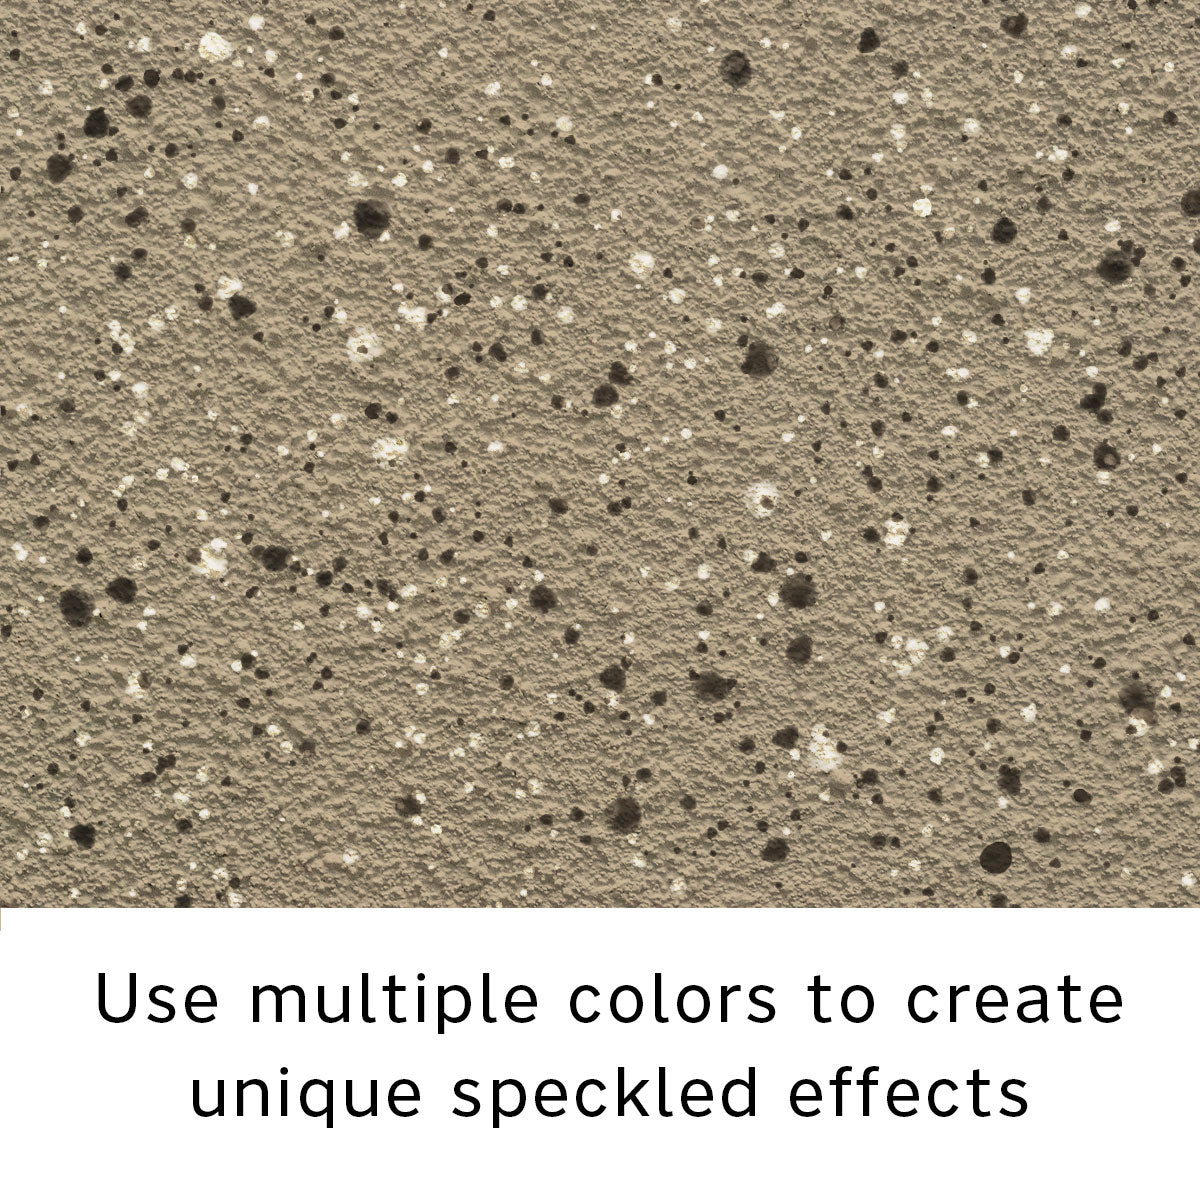 Texture-Eez color swatch for multiple colors